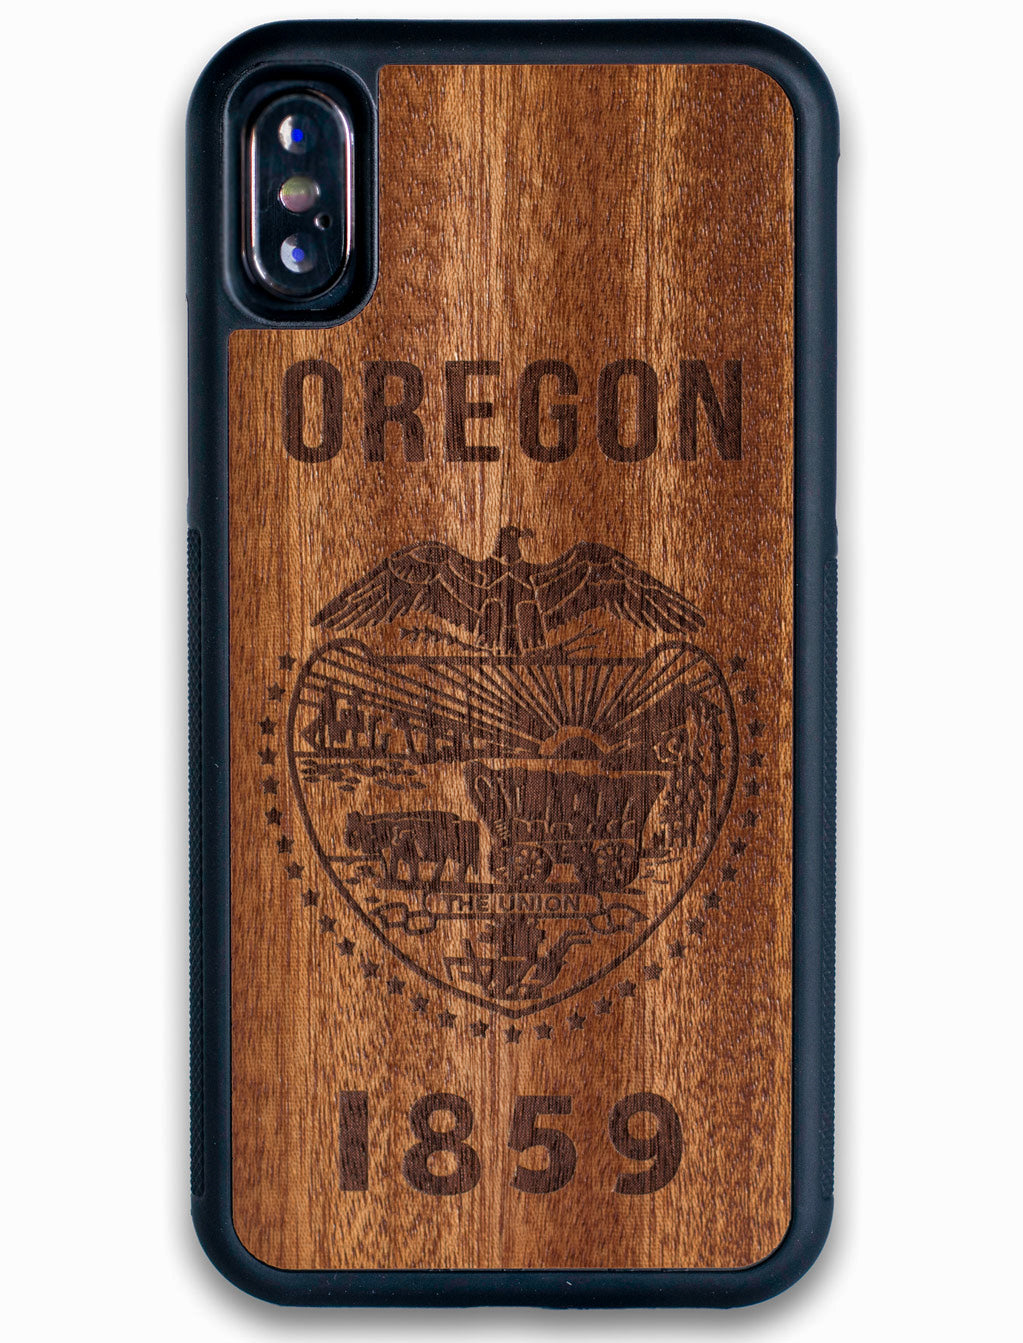 Oregon flag wooden iPhone X case